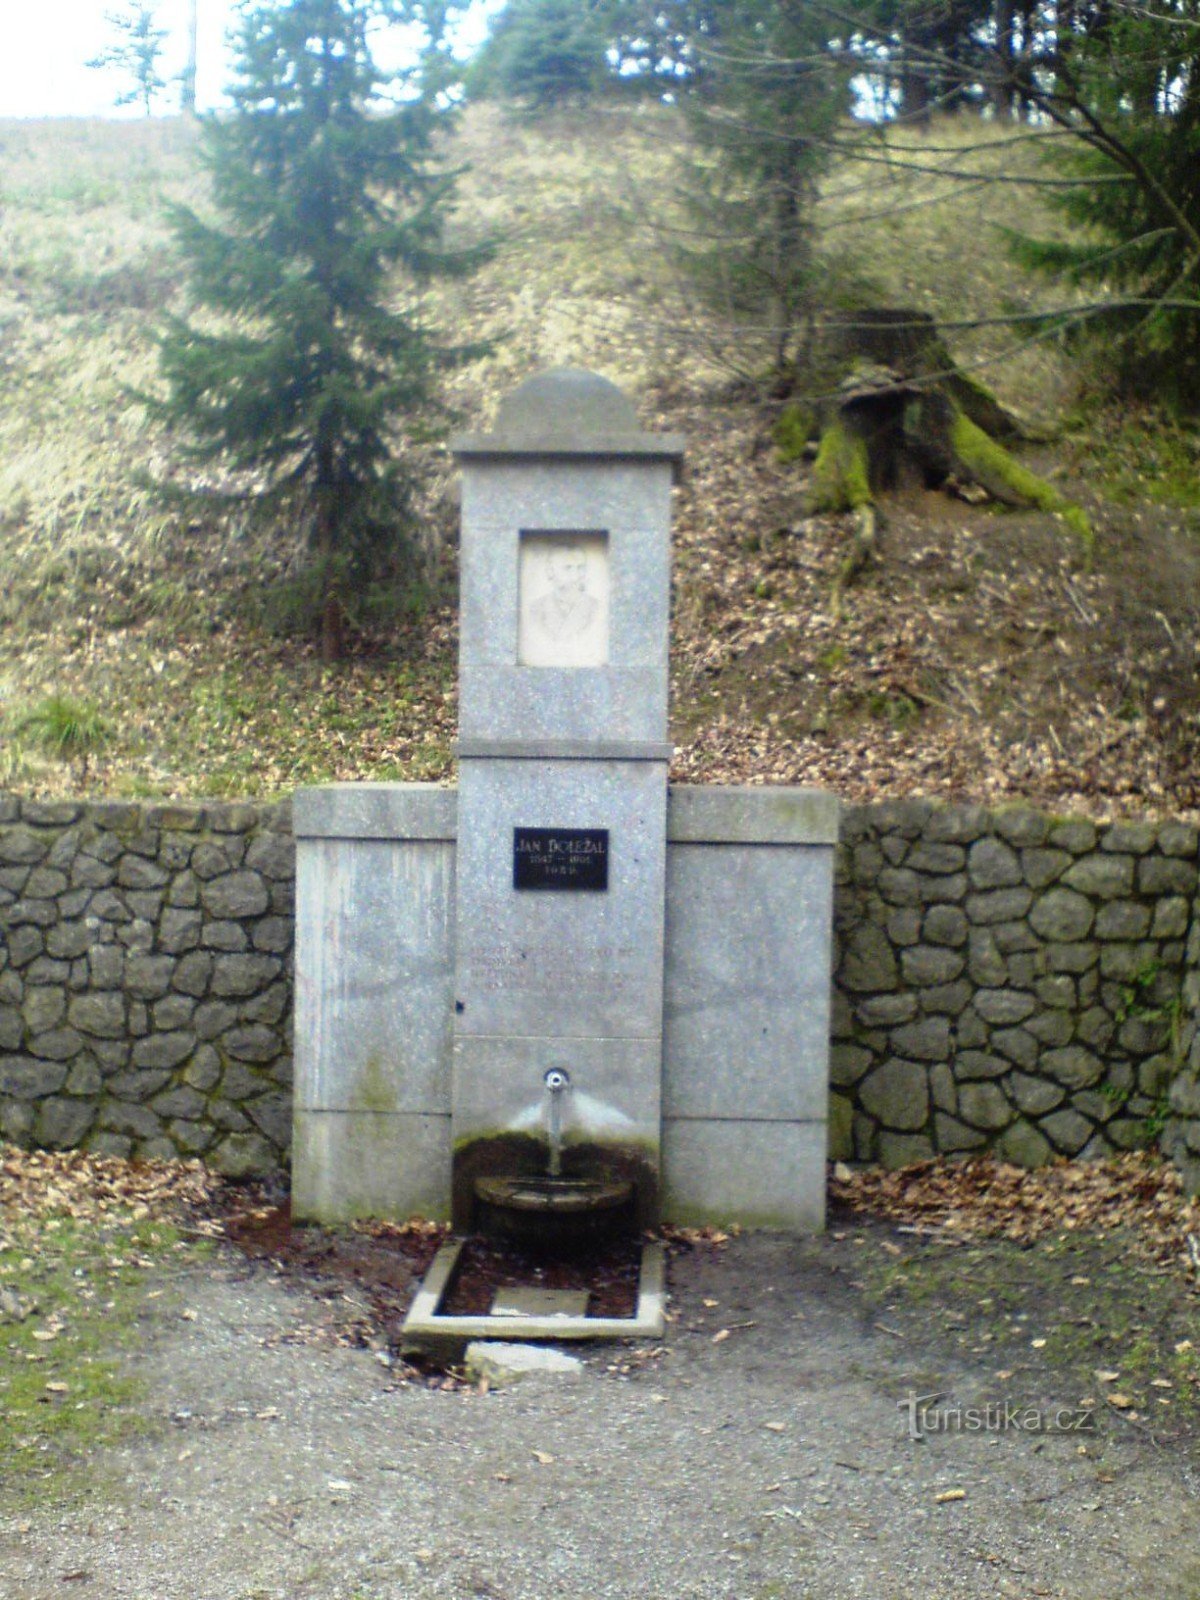 Doležel's well